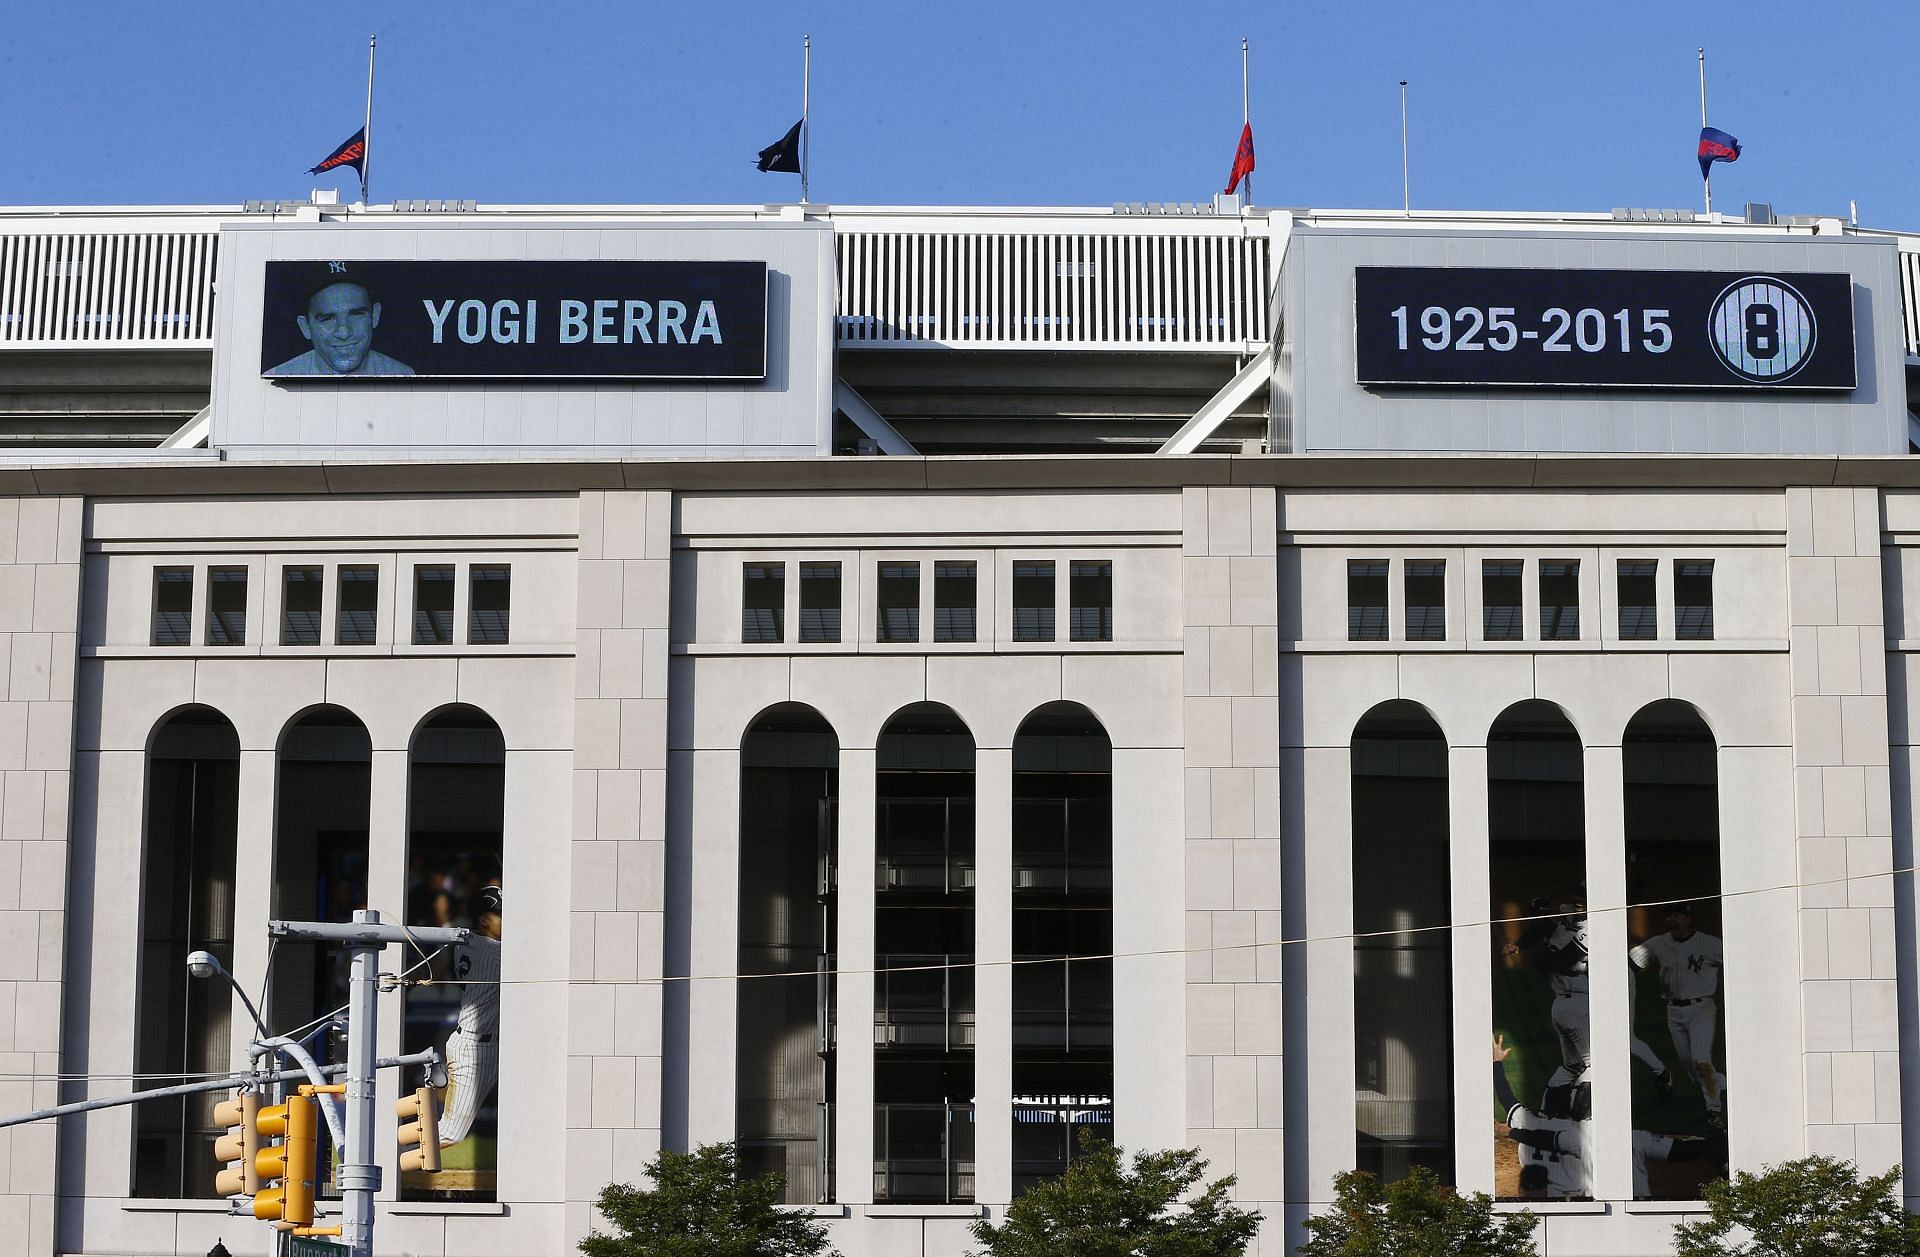 Yogi Berra led the New York Yankees to 5 World Series wins from 1949-1953